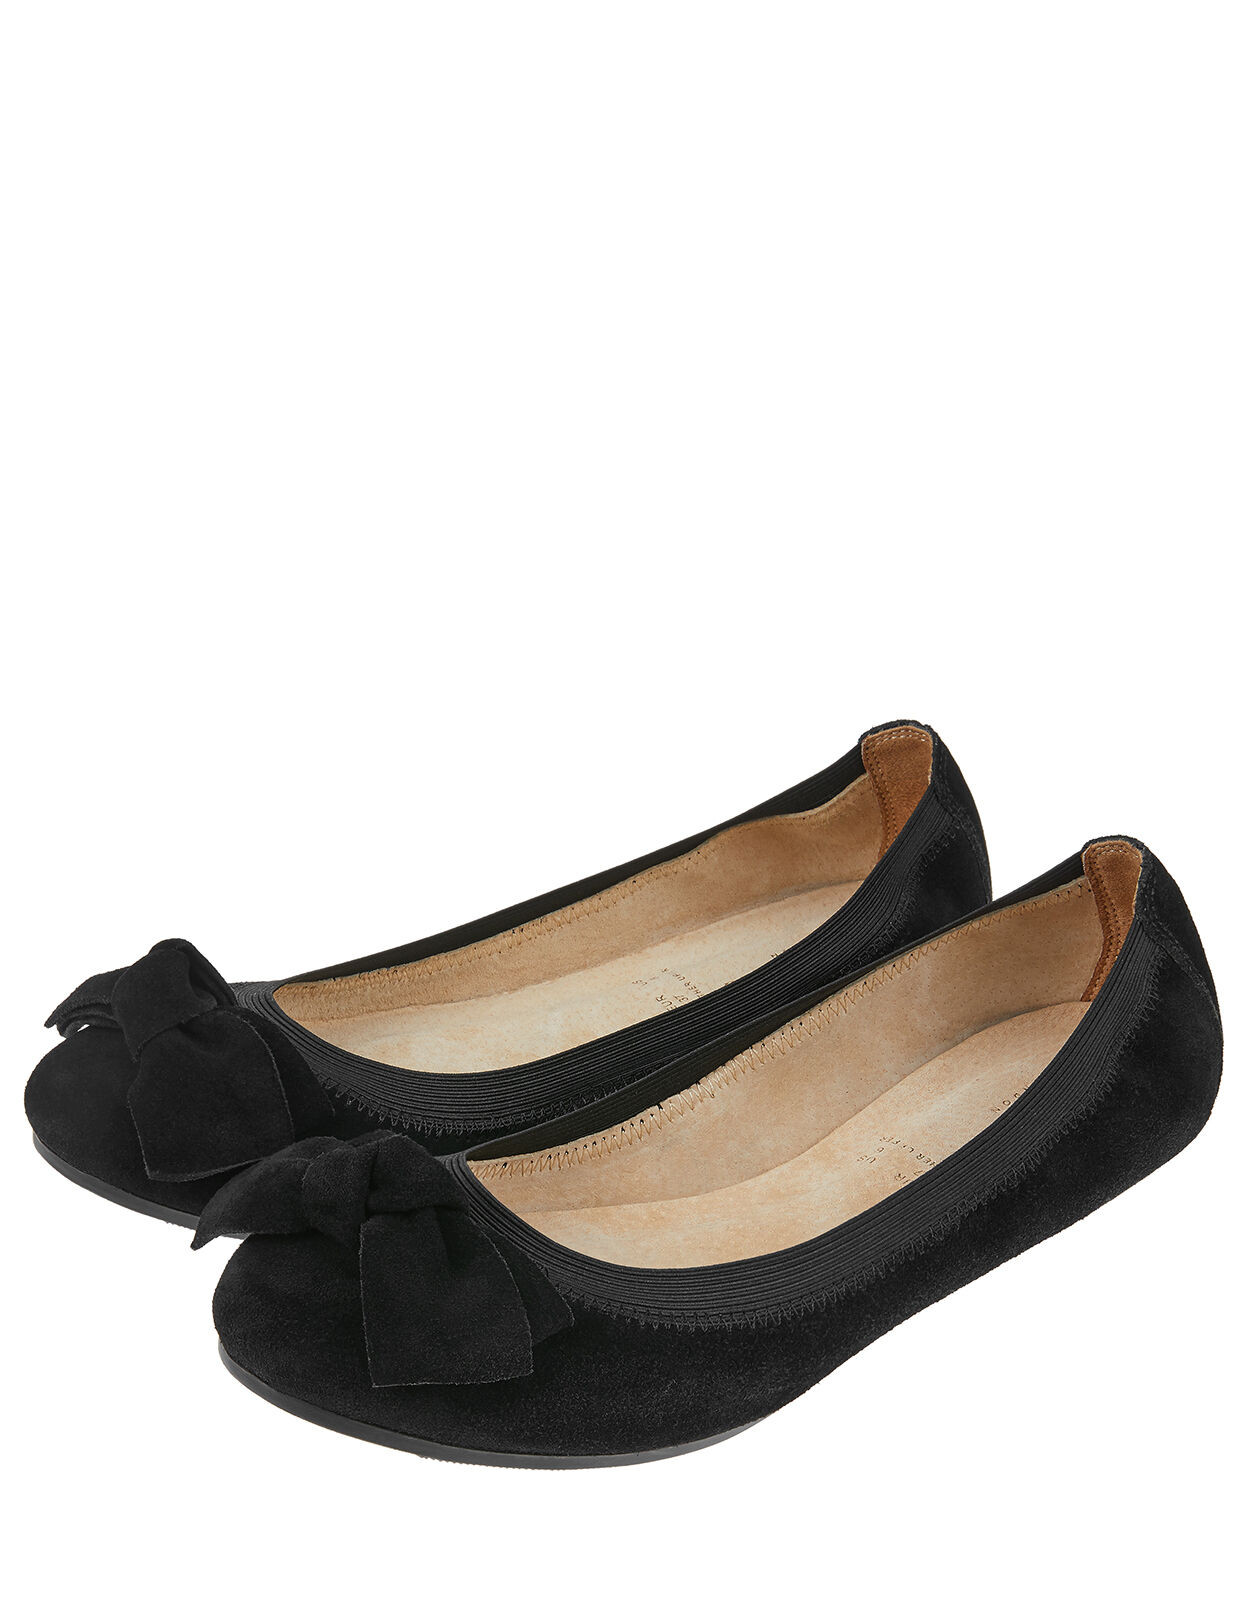 black ballerina shoes uk